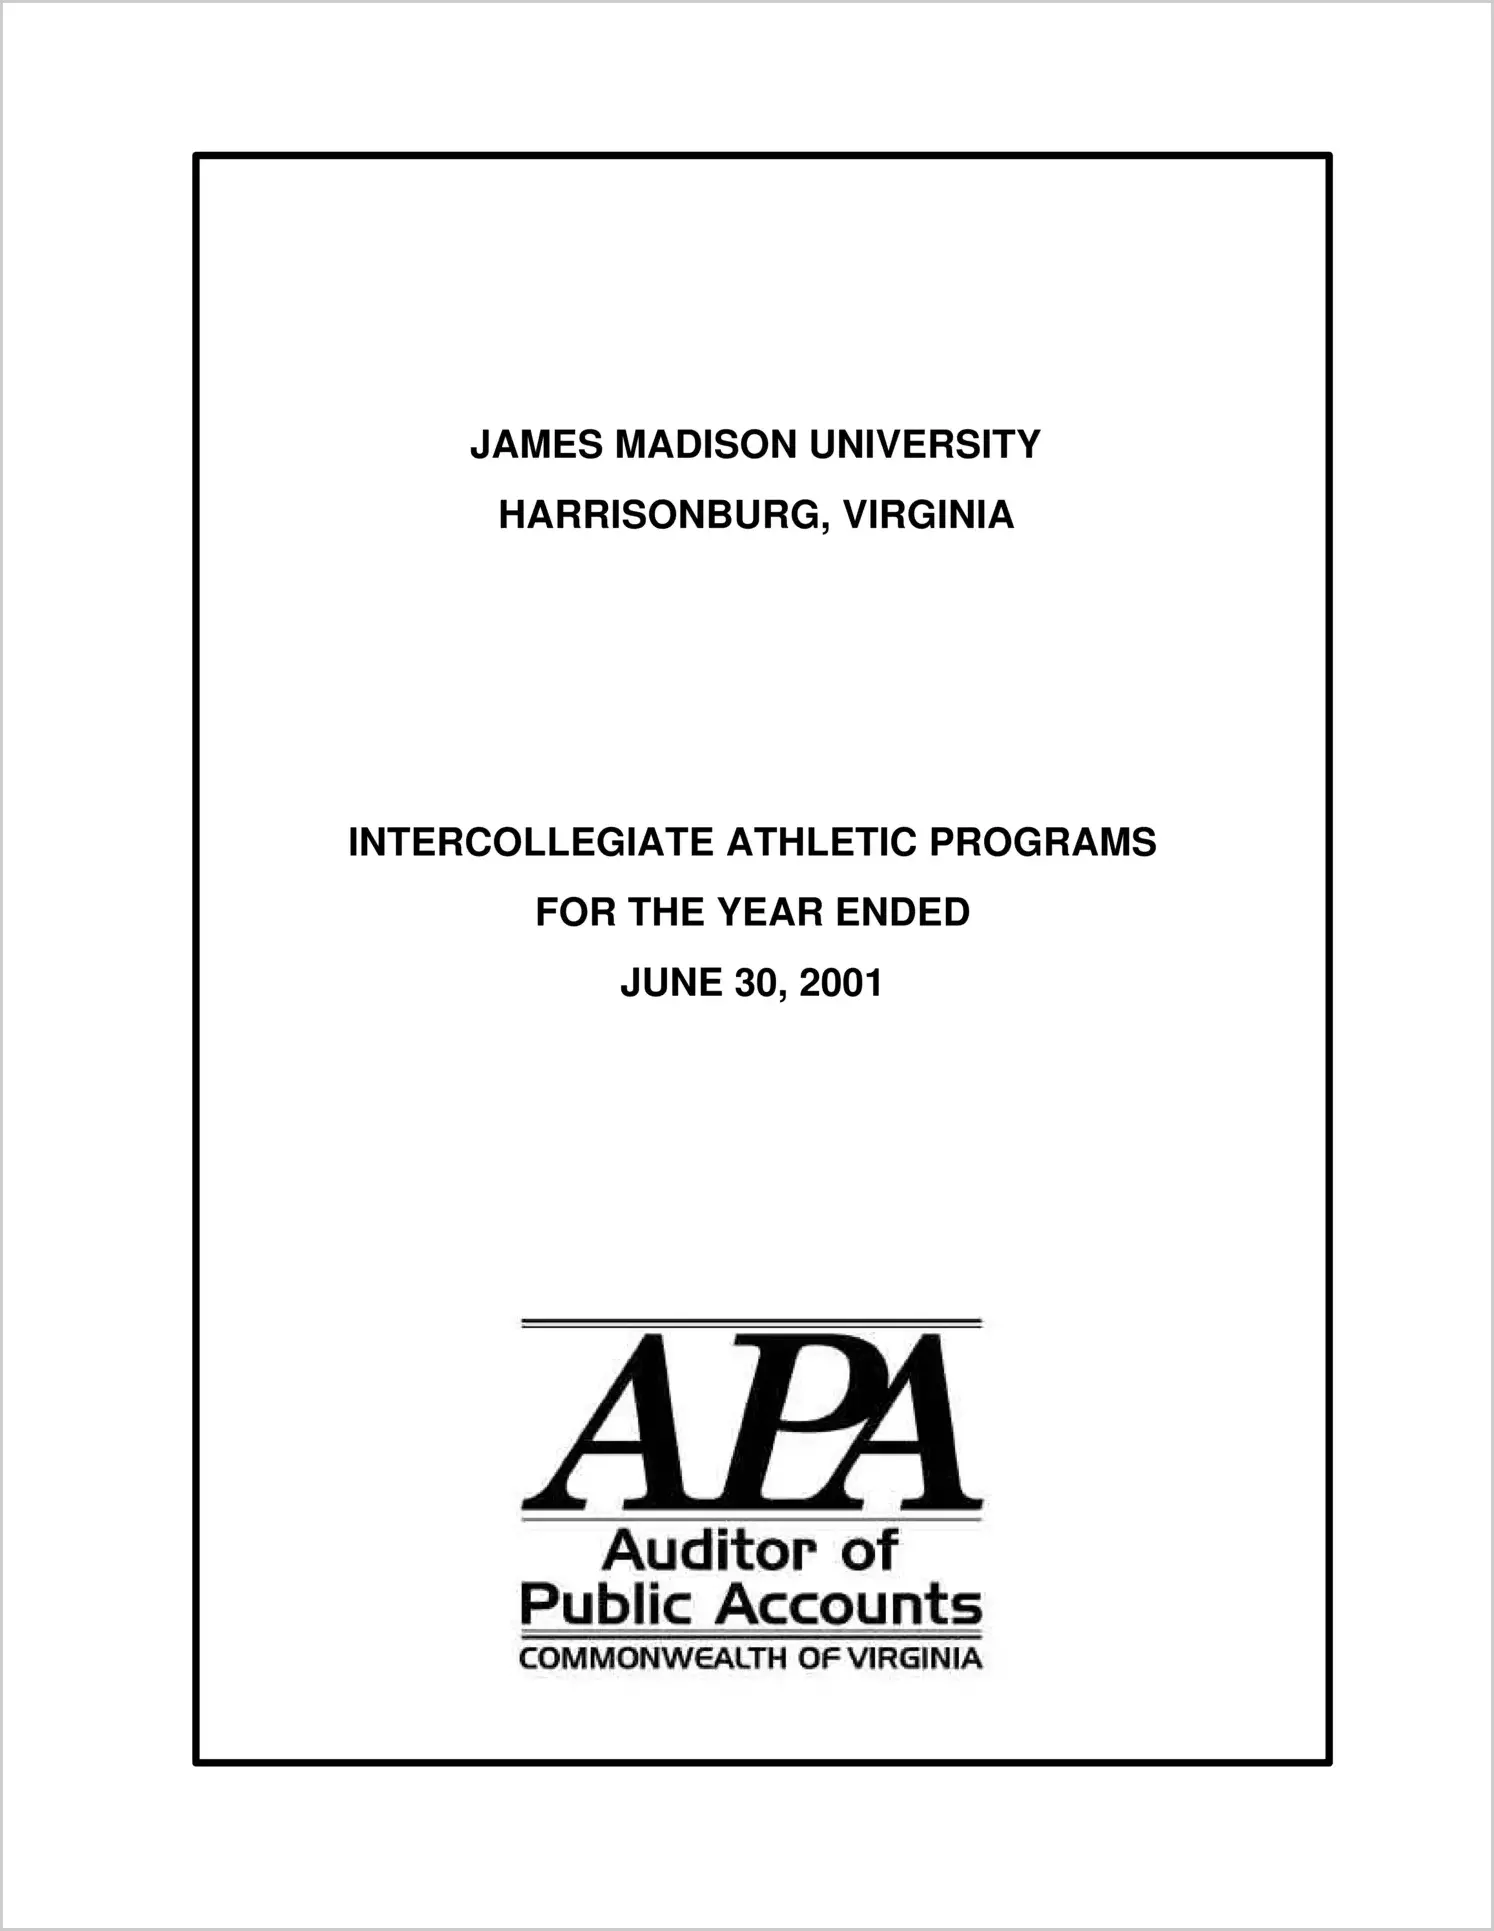 James Madison University Intercollegiate Athletic Programs for the year ended June 30, 2001